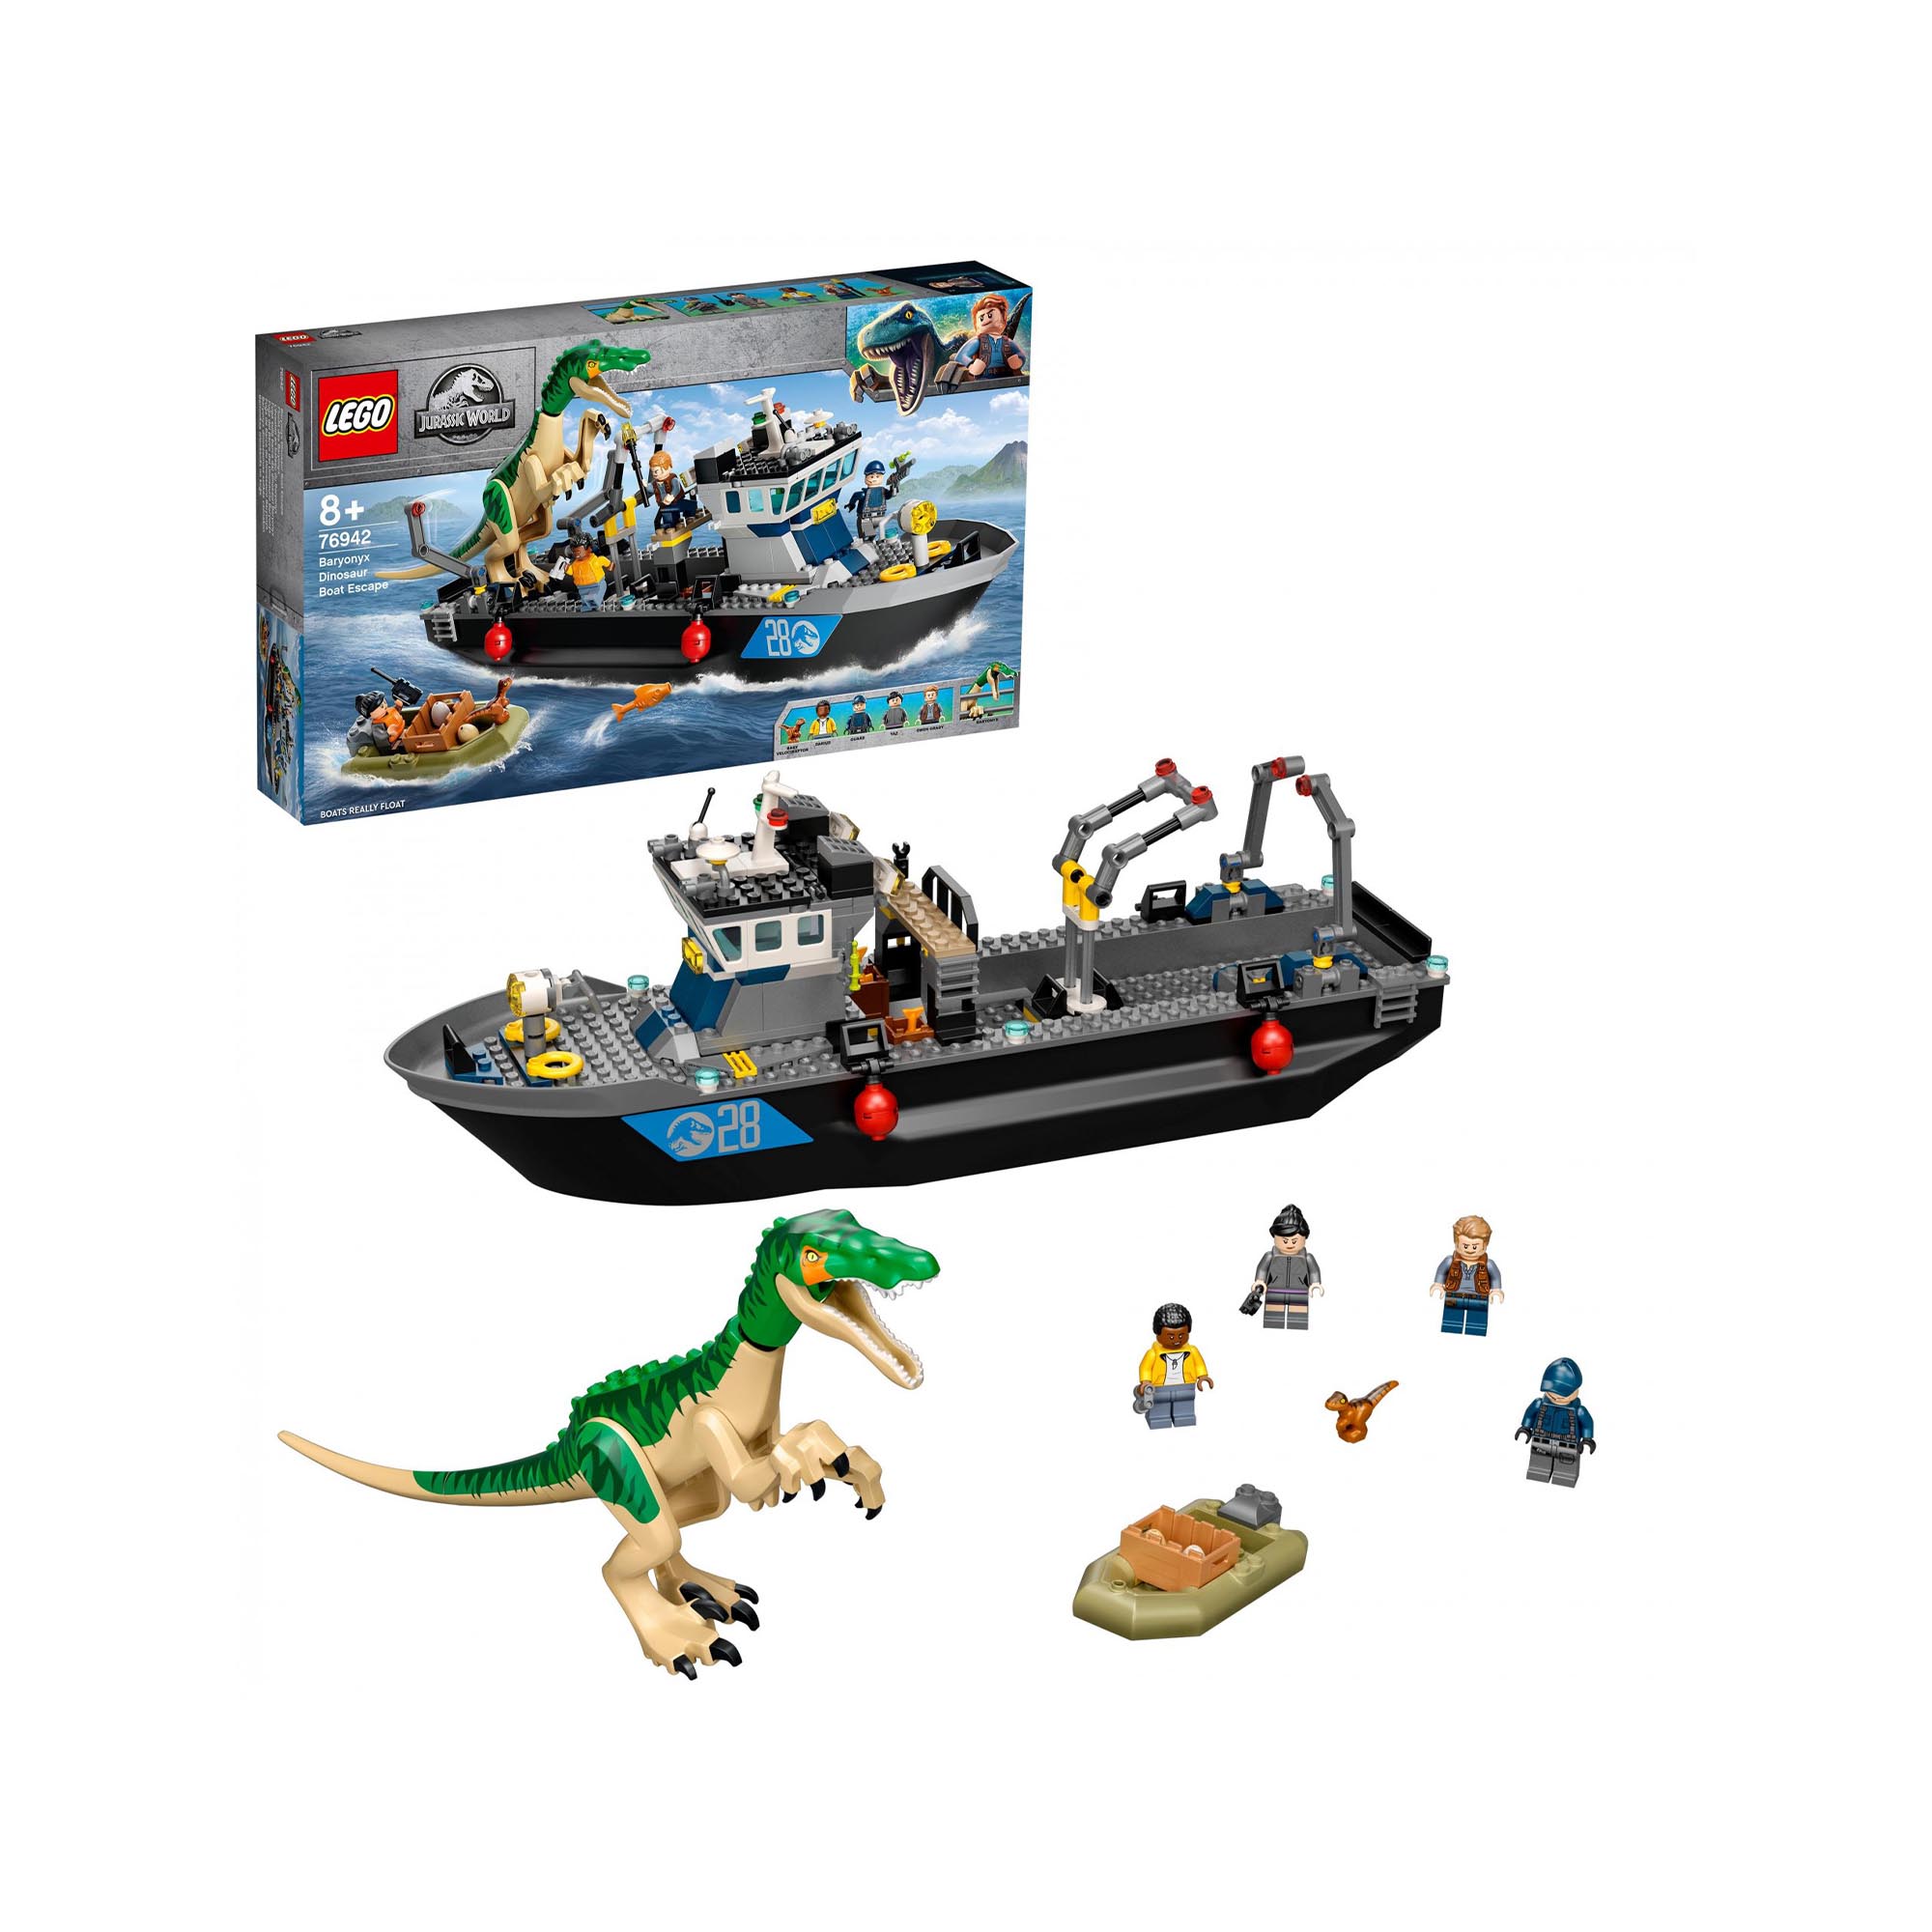 LEGO Jurassic World Fuga sulla Barca del Dinosauro Baryonyx, Regalo per Bambini  76942, , large